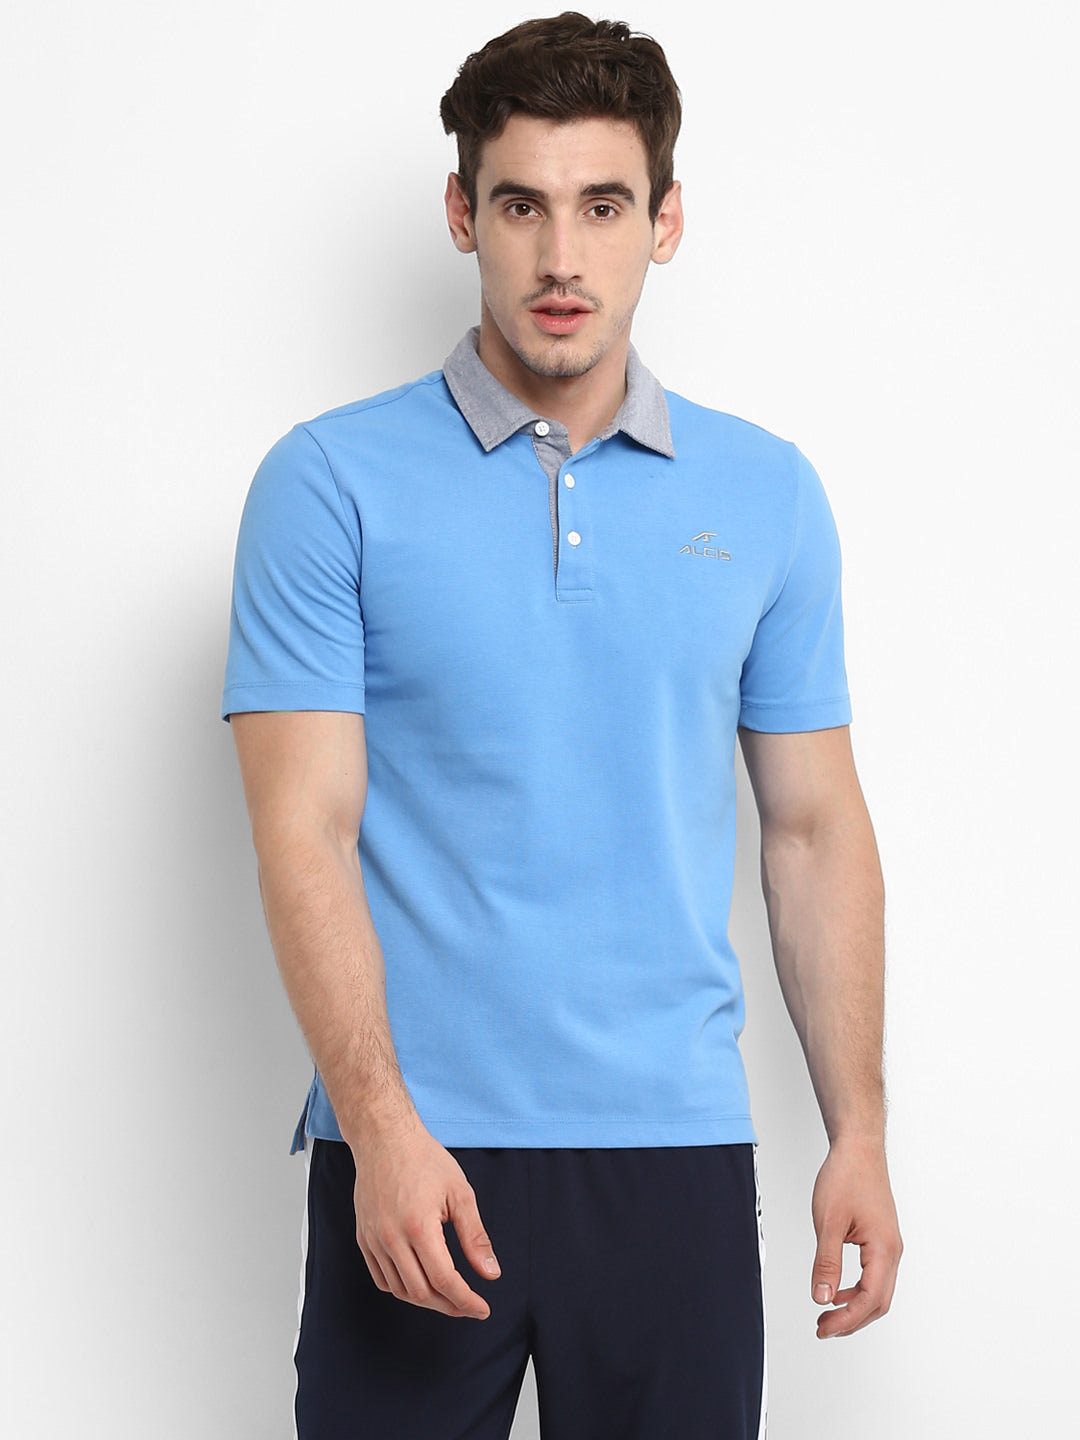 Alcis Mens Solid Blue Polo T-Shirt ECMPO02020 ECMPO02020-S